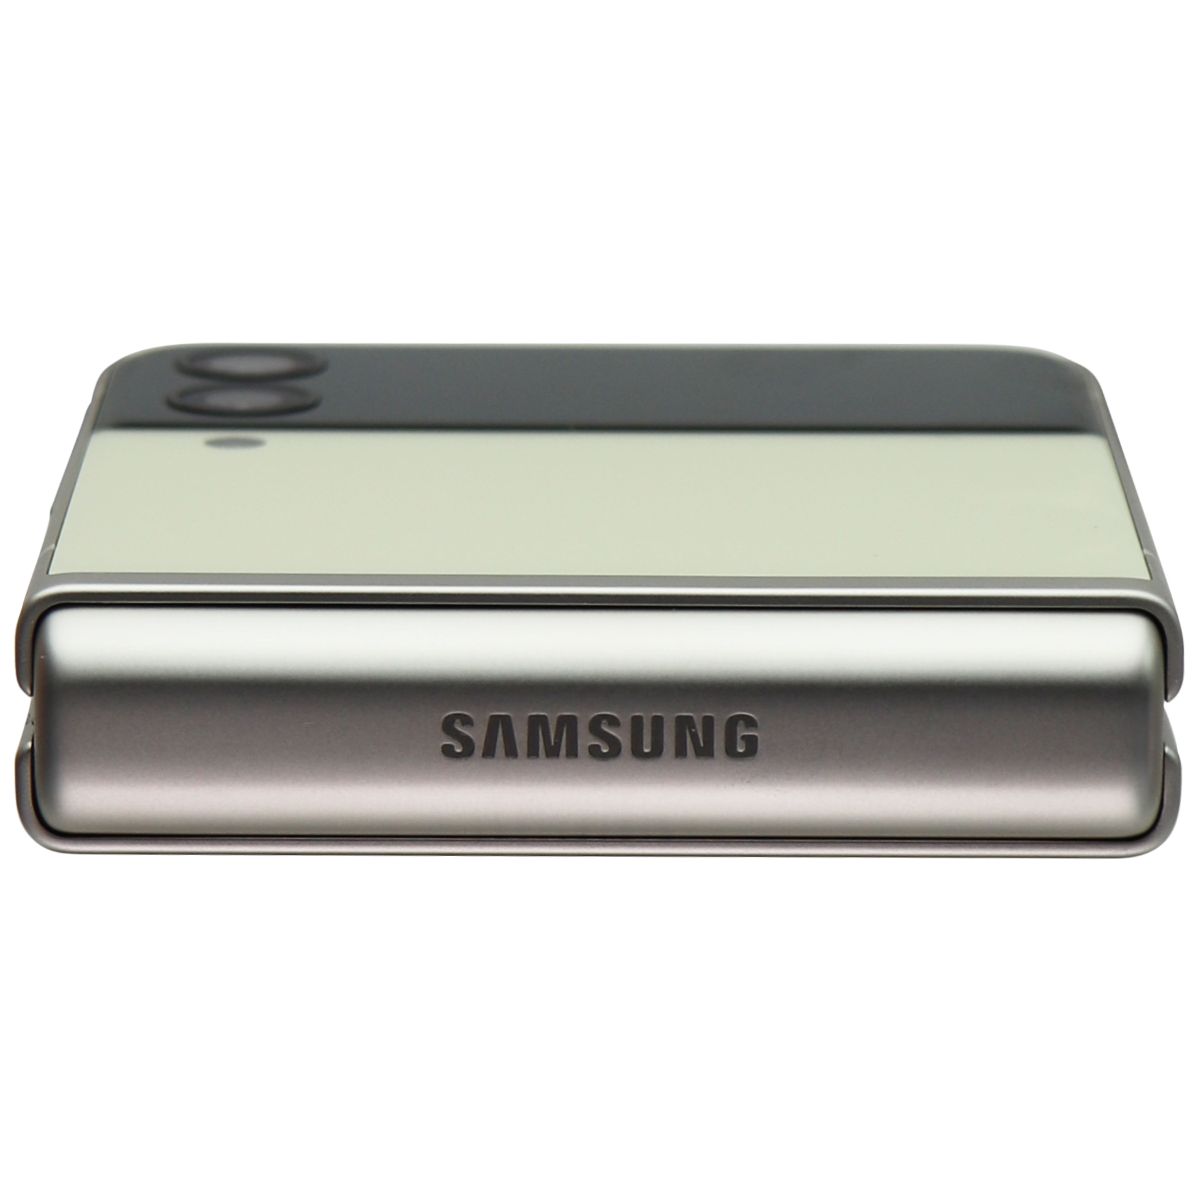 Samsung Galaxy Z Flip3 5G (6.7-inch) SM-F711U (Verizon Only) - 128GB / Cream Cell Phones & Smartphones Samsung    - Simple Cell Bulk Wholesale Pricing - USA Seller